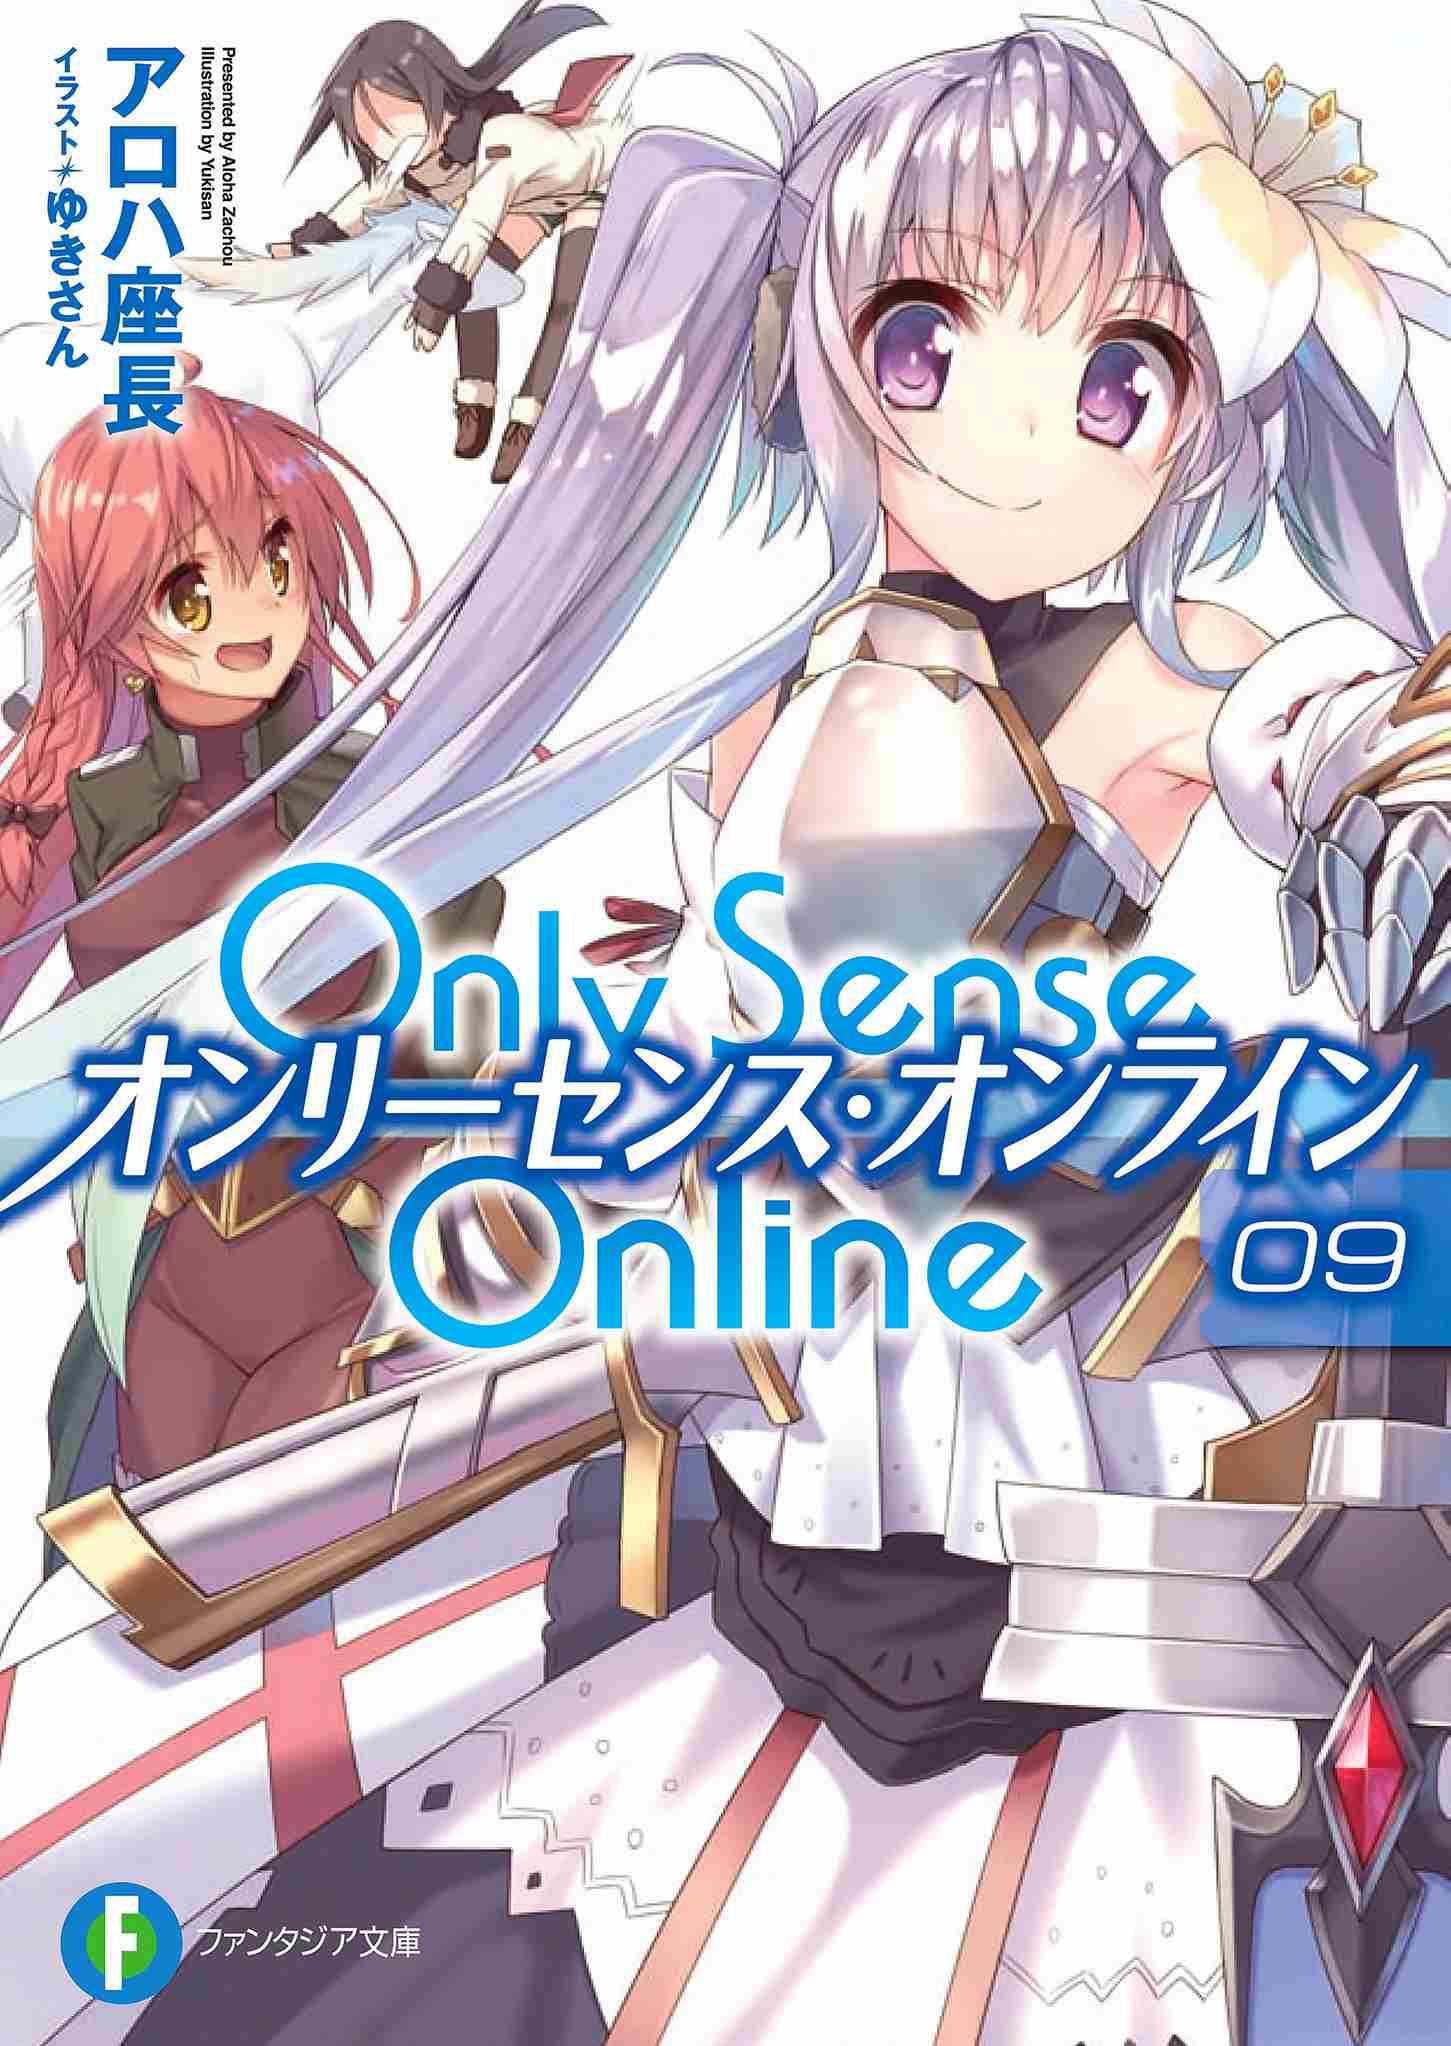 Only Sense Online #009